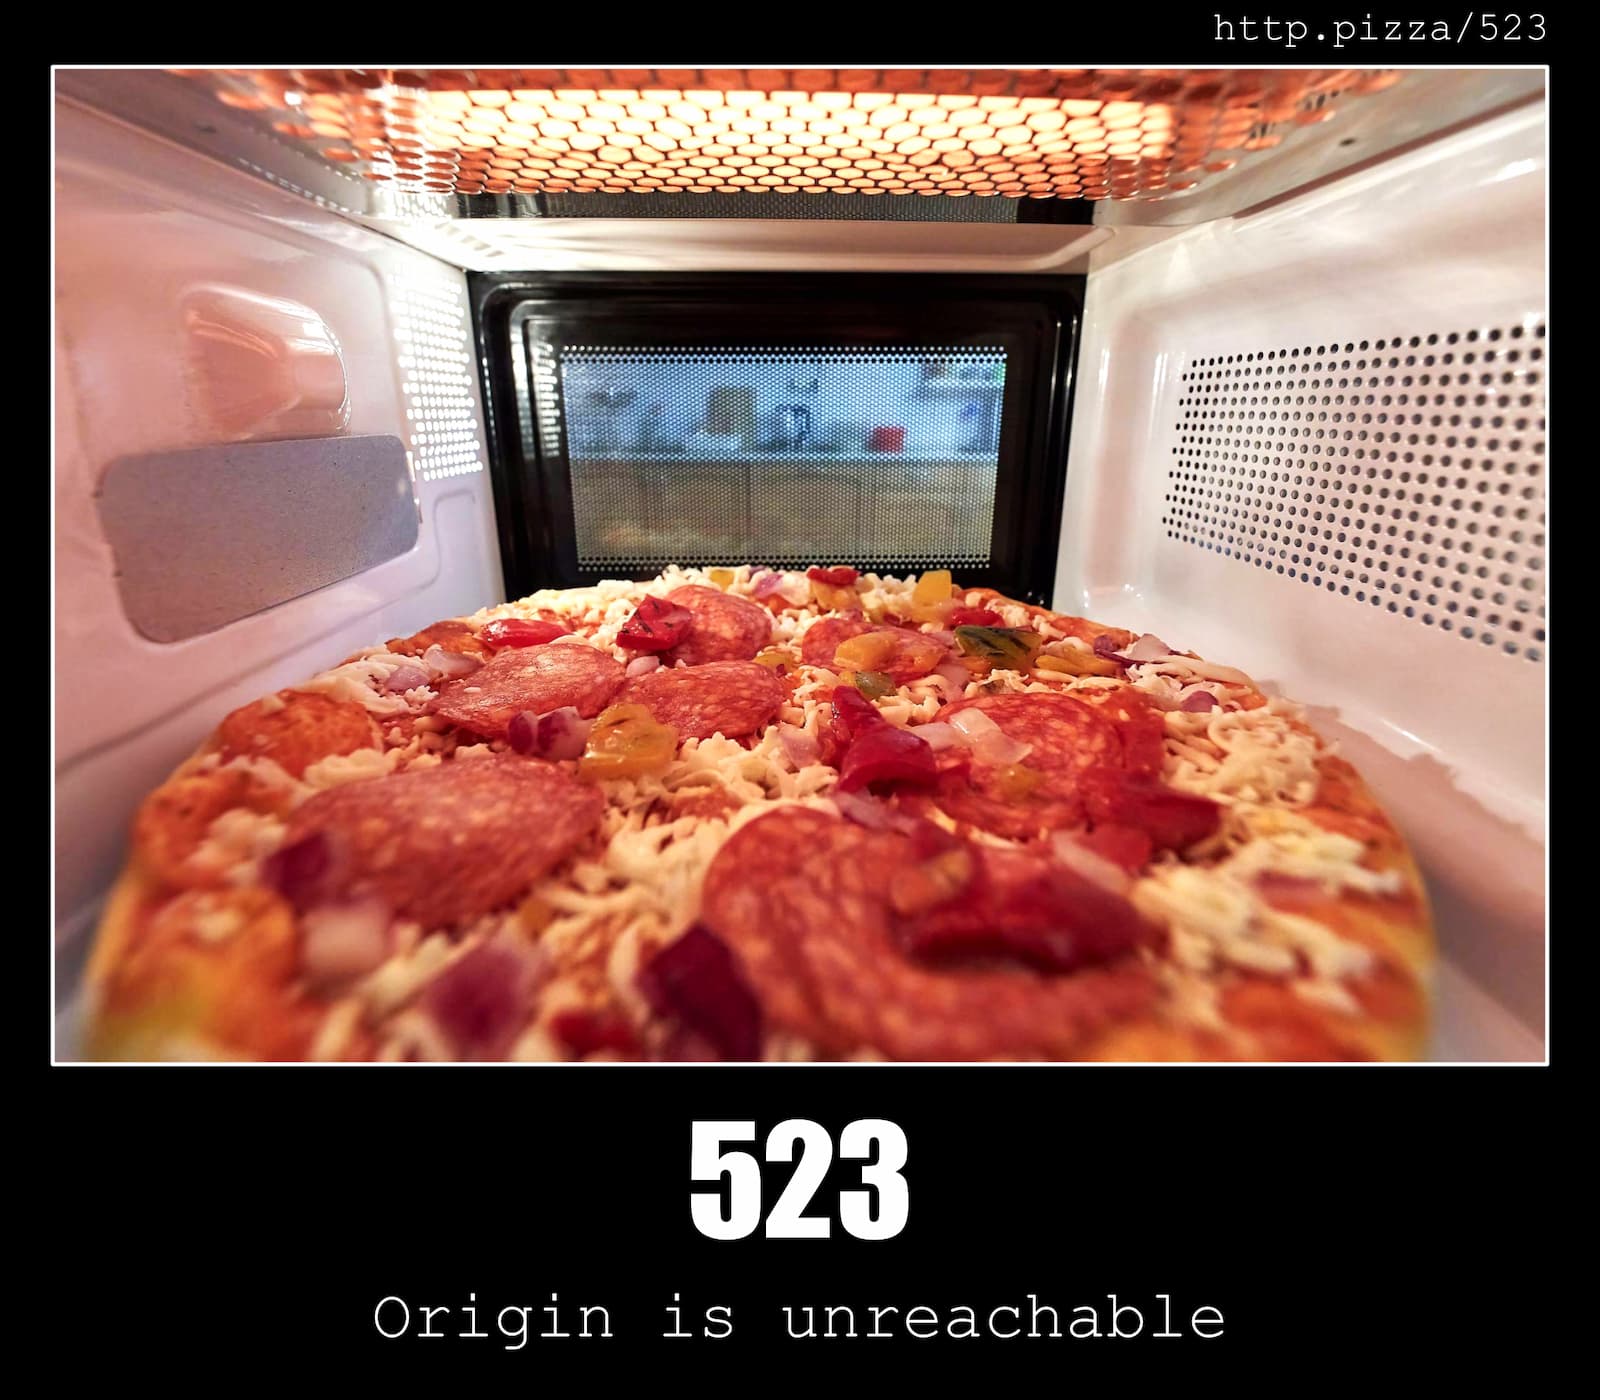 HTTP Status Code 523 Origin is unreachable & Pizzas